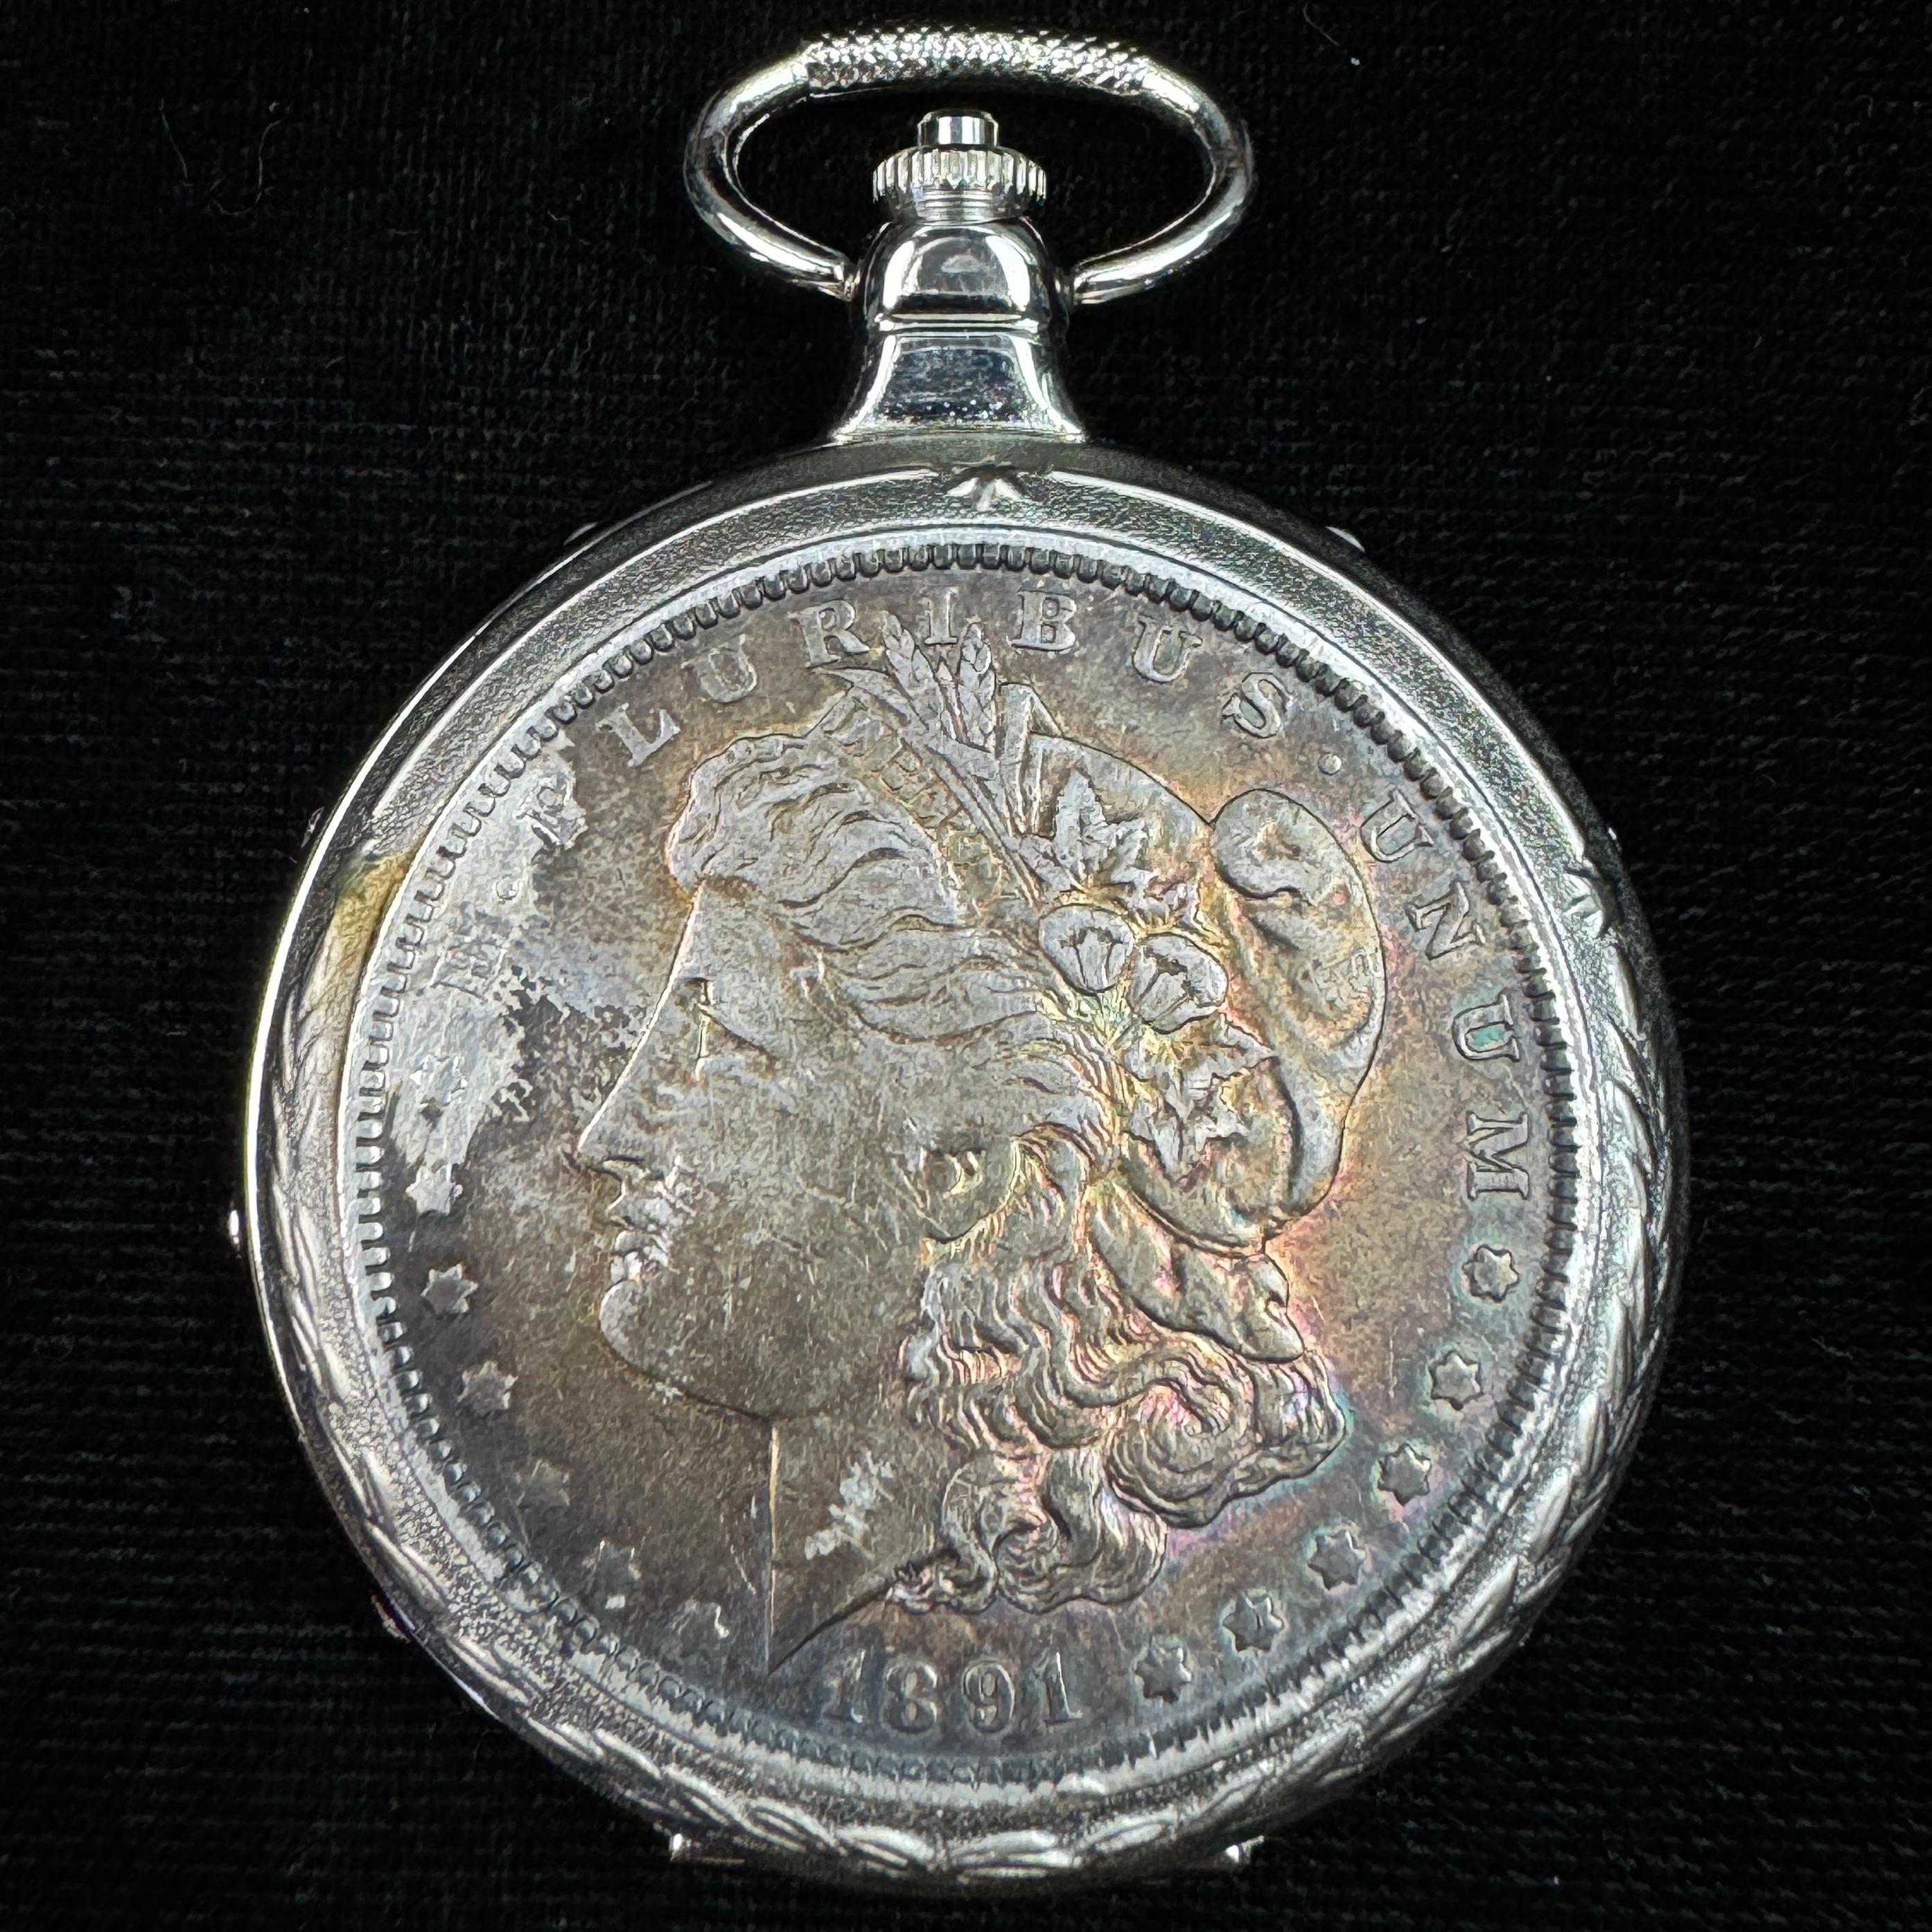 Like-new modern quartz American Historic Society covered pocket watch